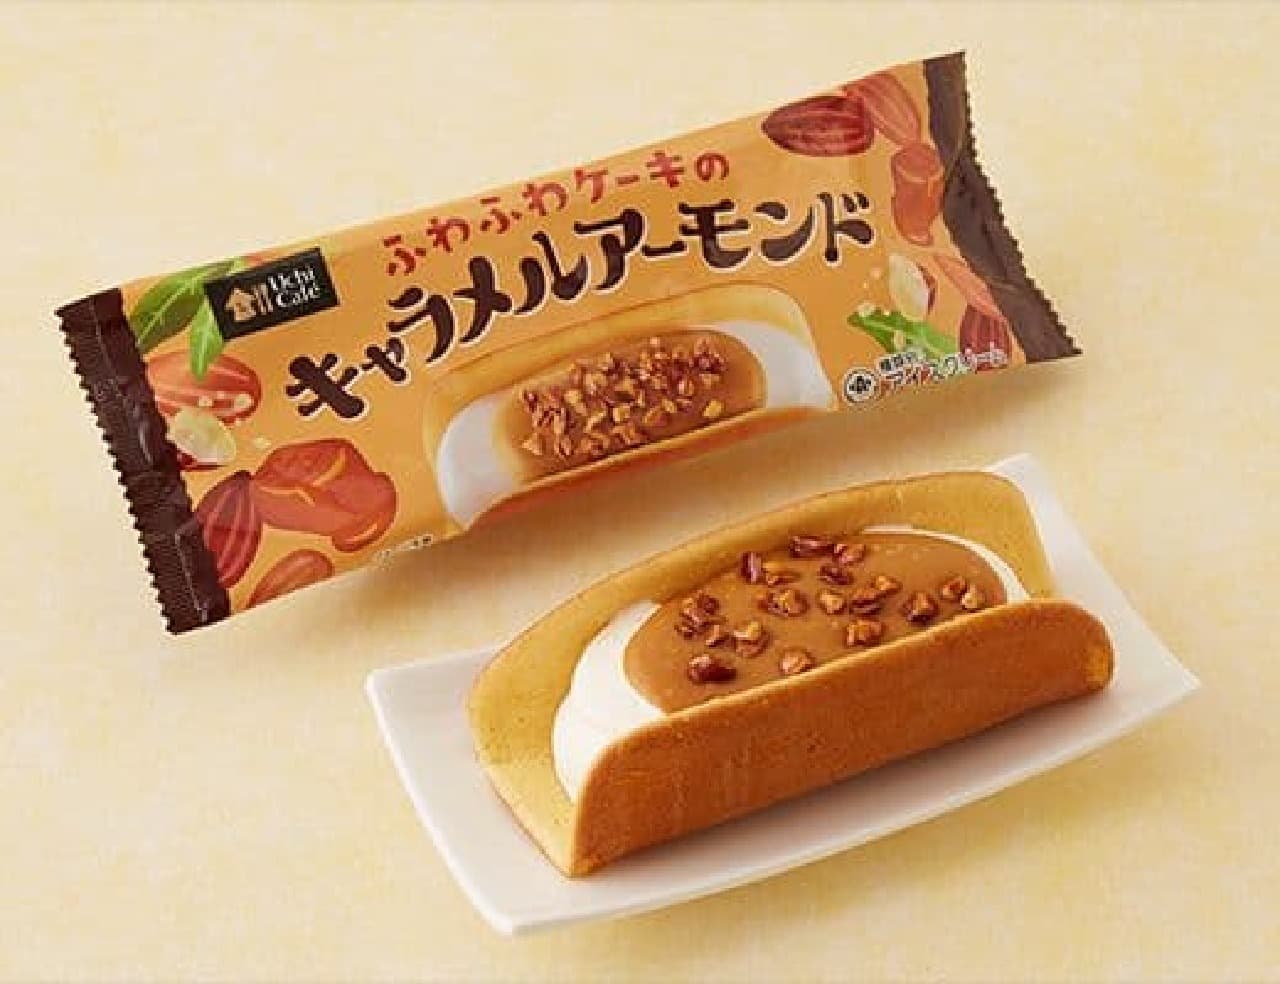 Lawson "Uchi Cafe Fluffy Cake Caramel Almond 68ml"